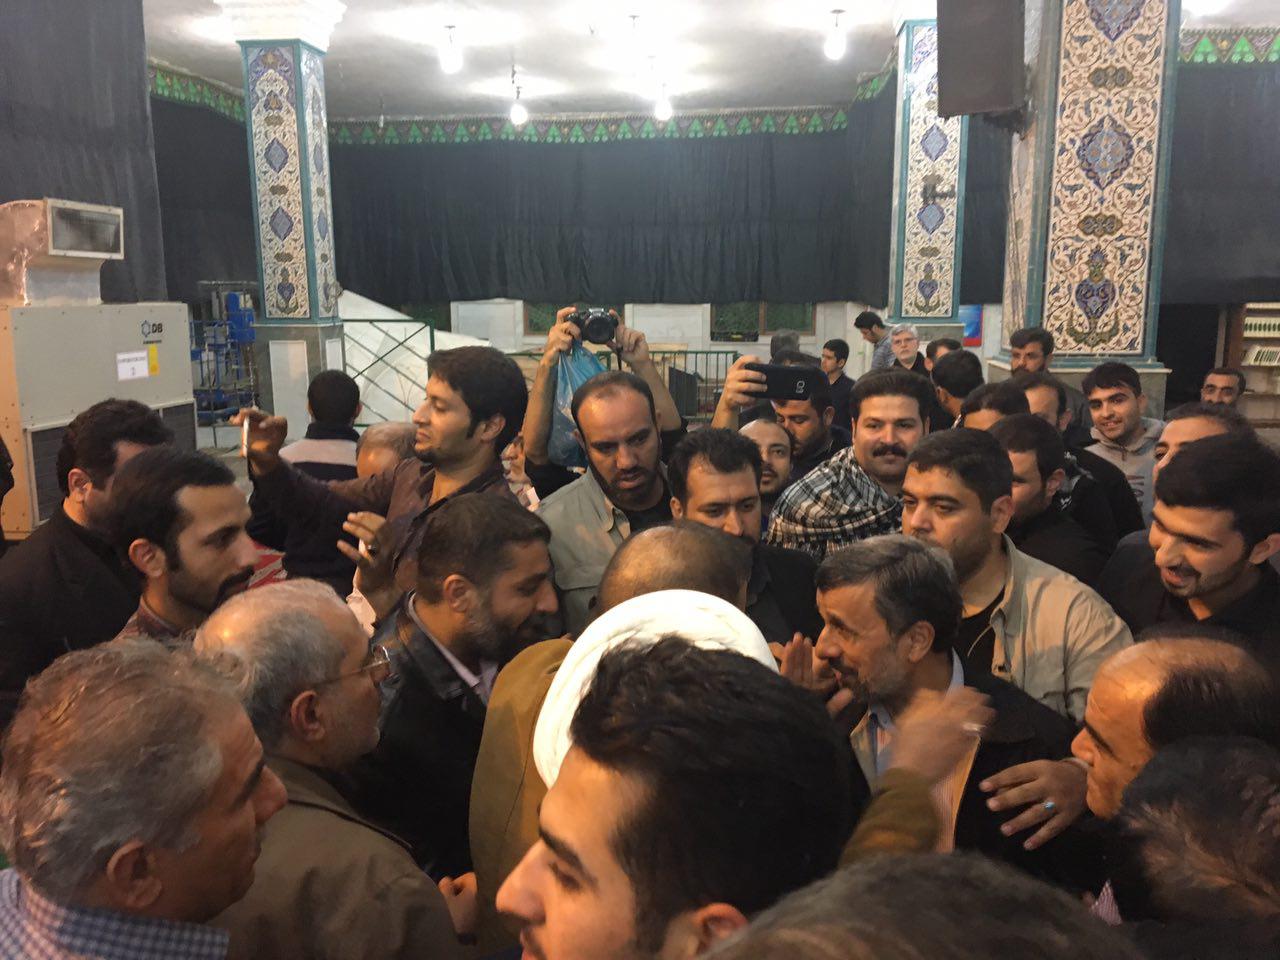 احمدی نژاد در آرامگاه علی بن مهزیار+عکس